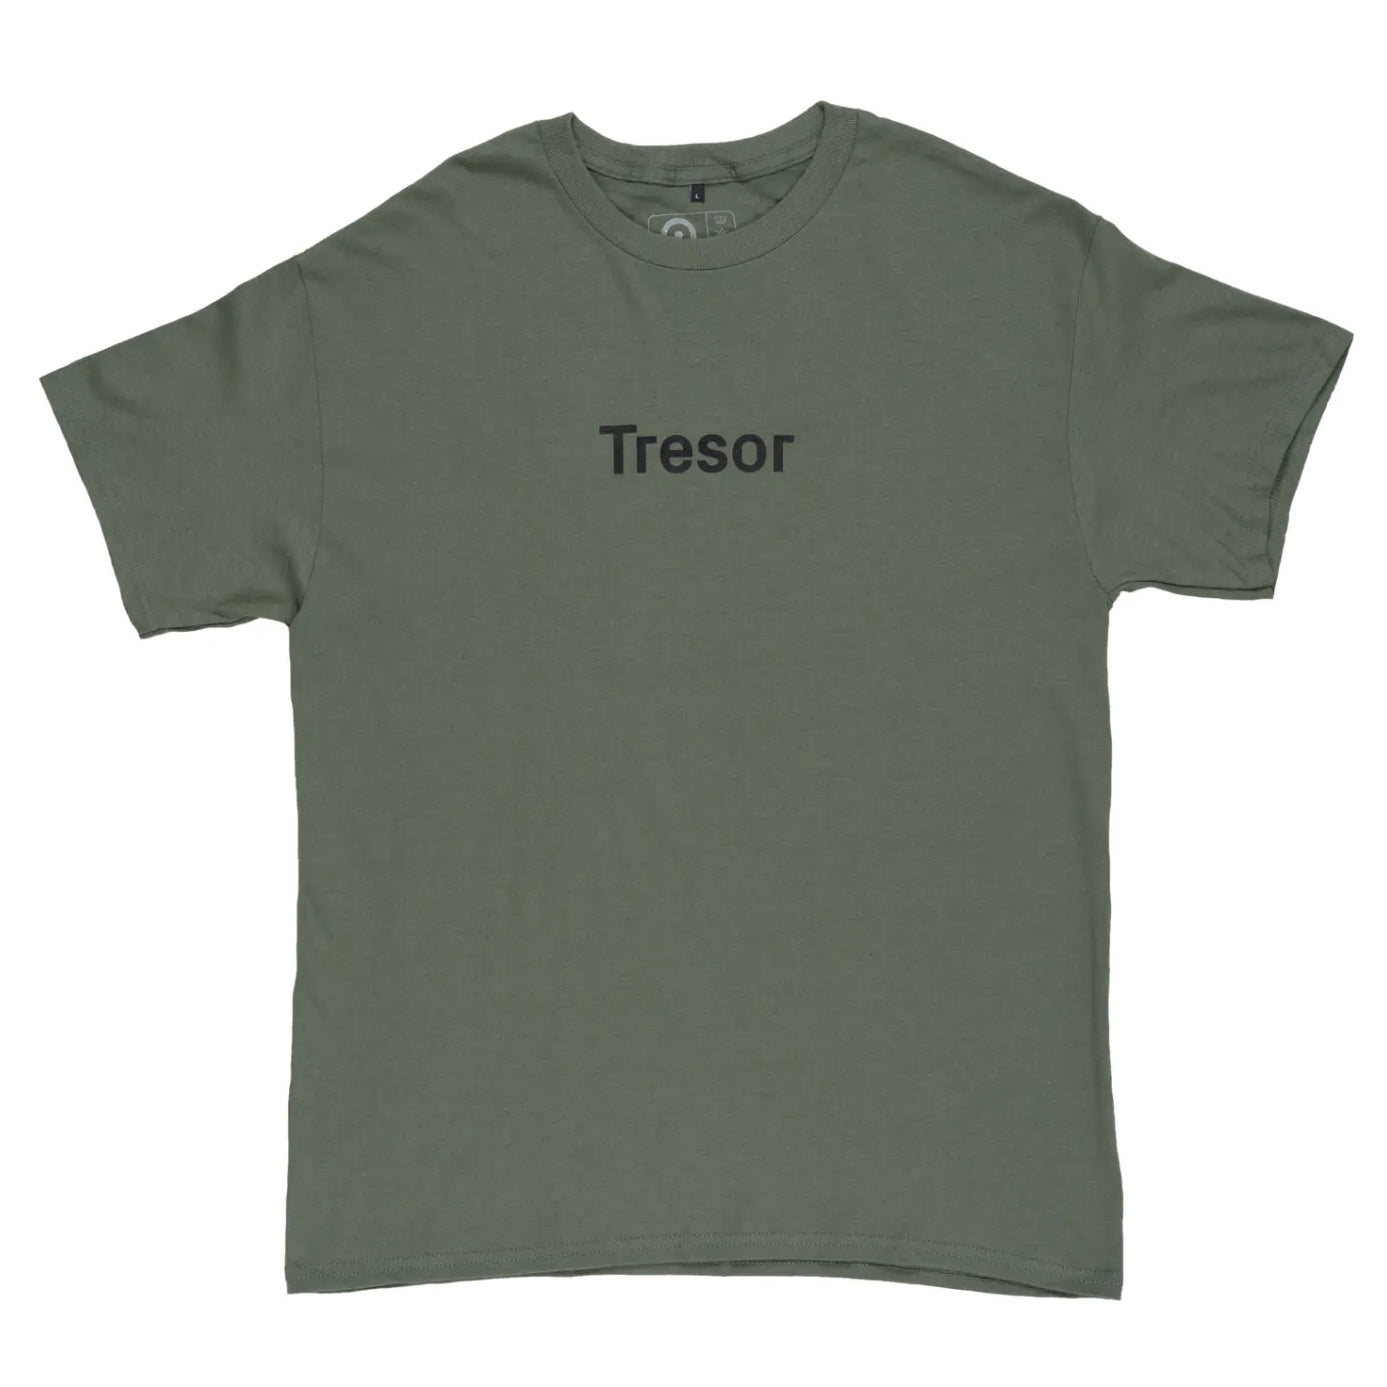 Tresor Classic T-Shirt (Olive + Black)